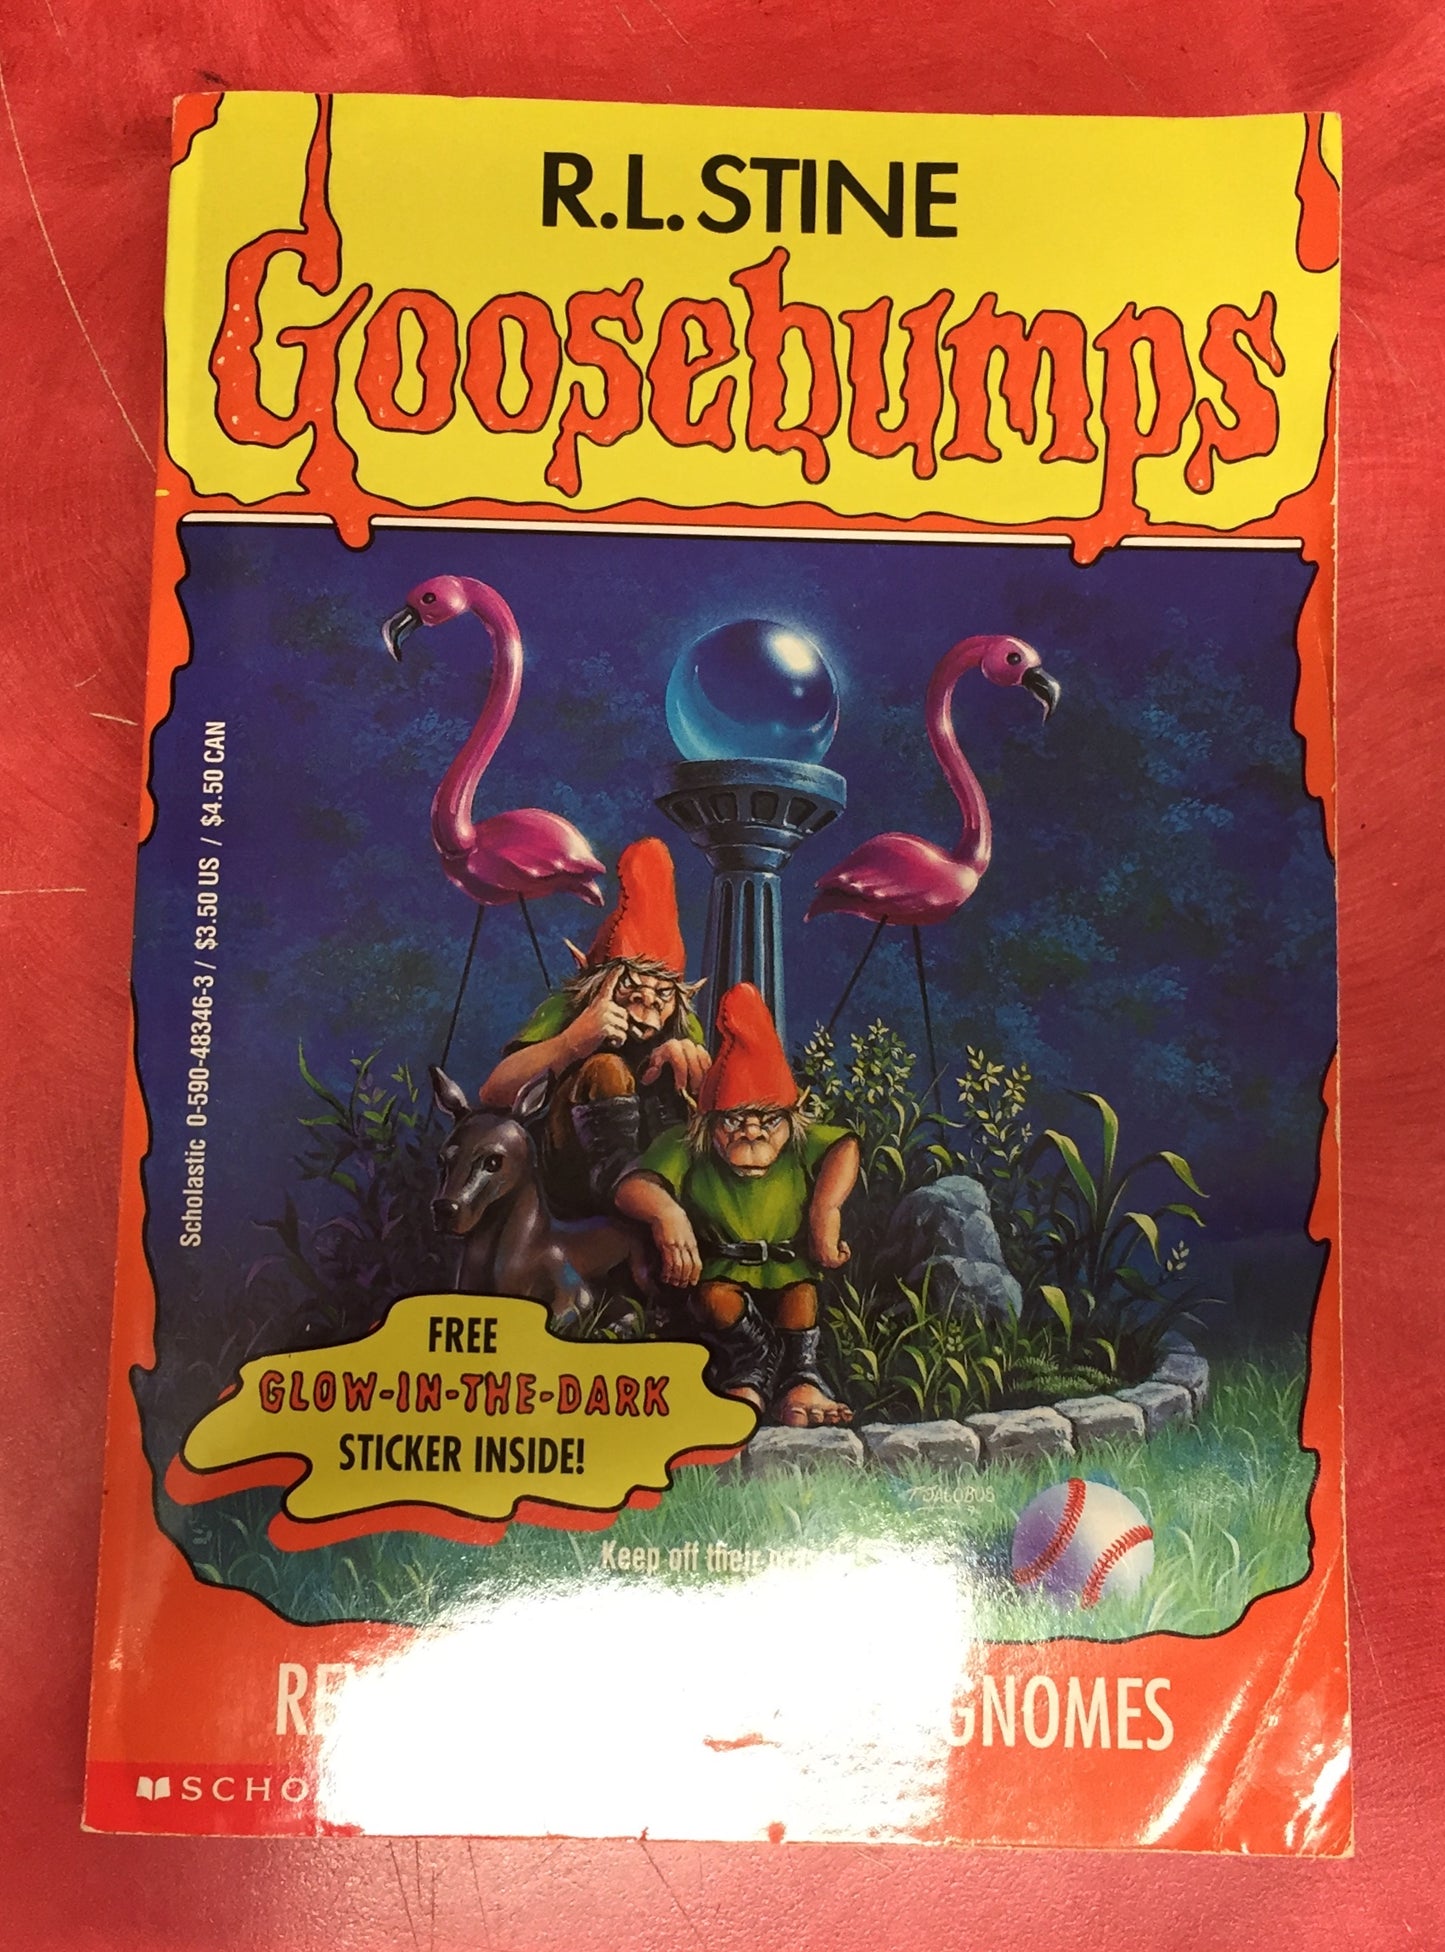 Goosebumps R. L. Stine Revenge of the lawn gnomes Issue 34